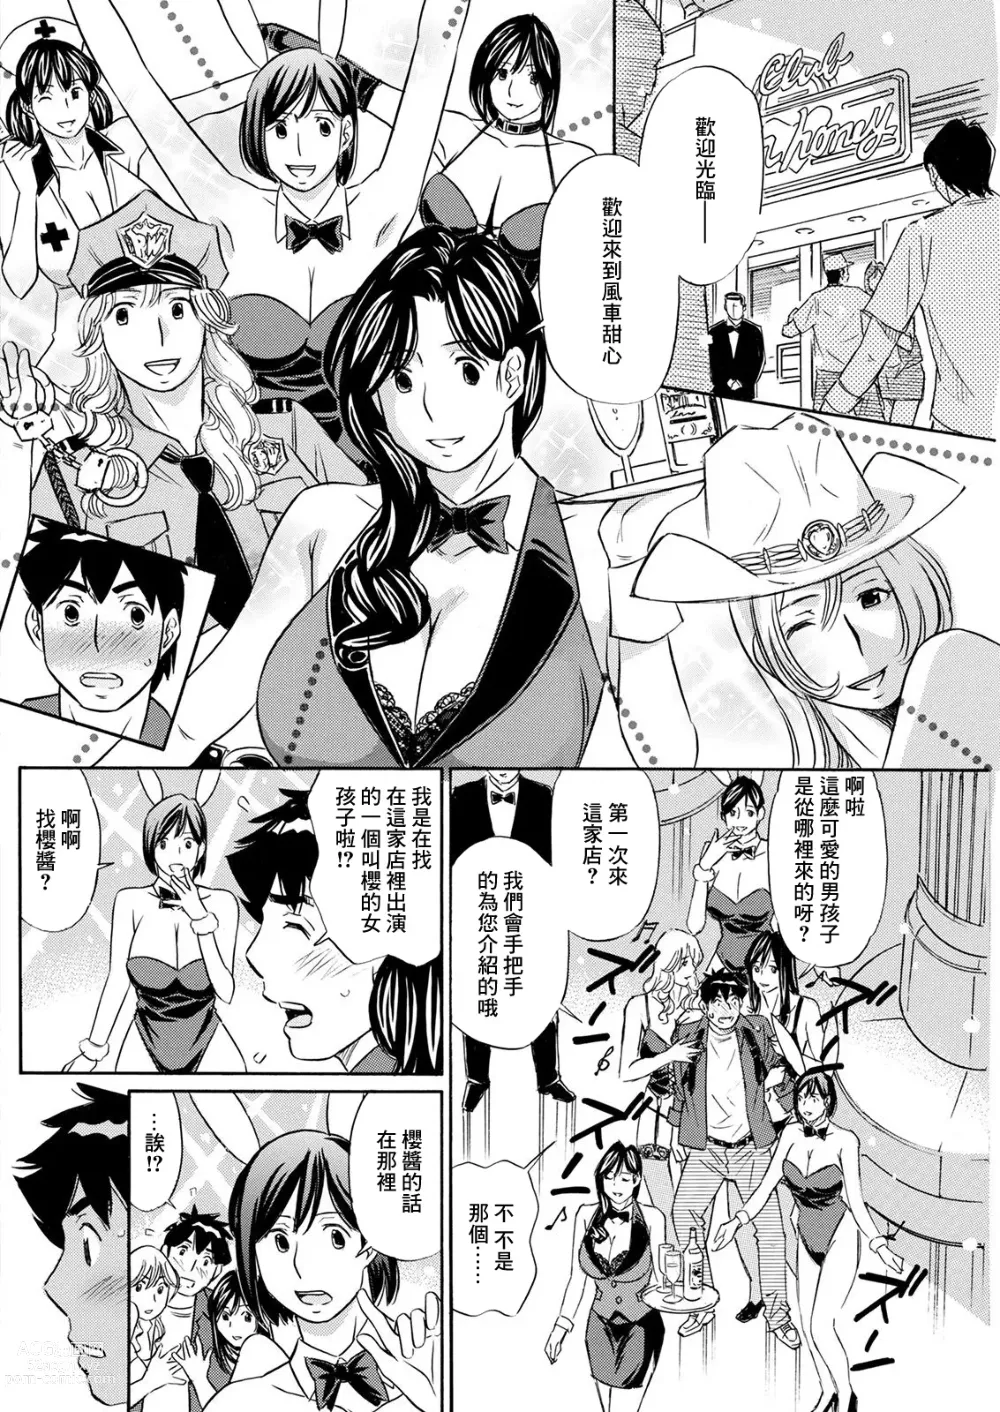 Page 6 of manga Burlesque e Youkoso - Welcome to Burlesque